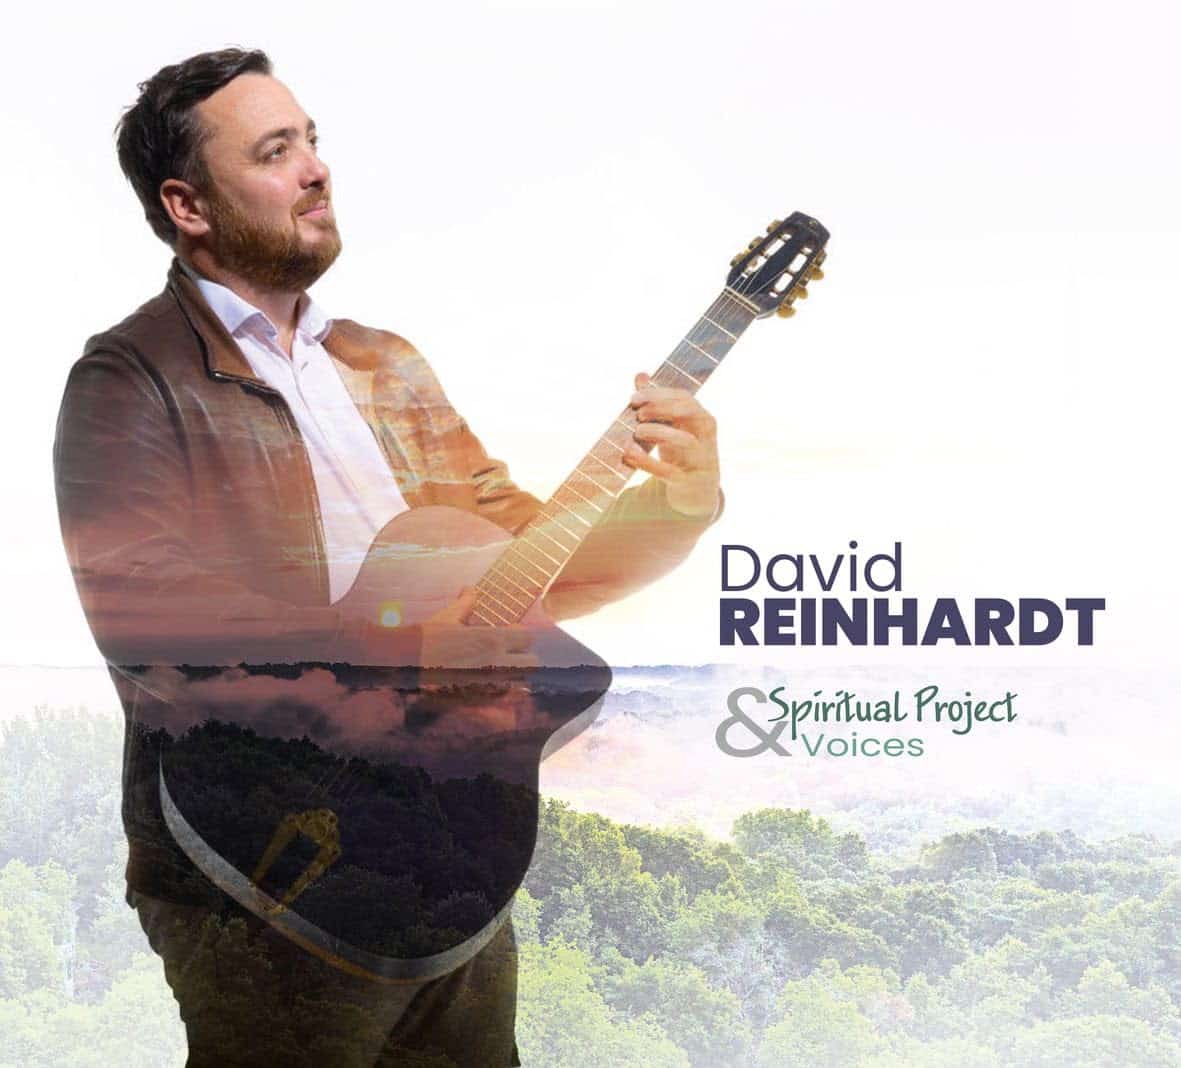 DAVID REINHARDT - Spiritual Project and Voices